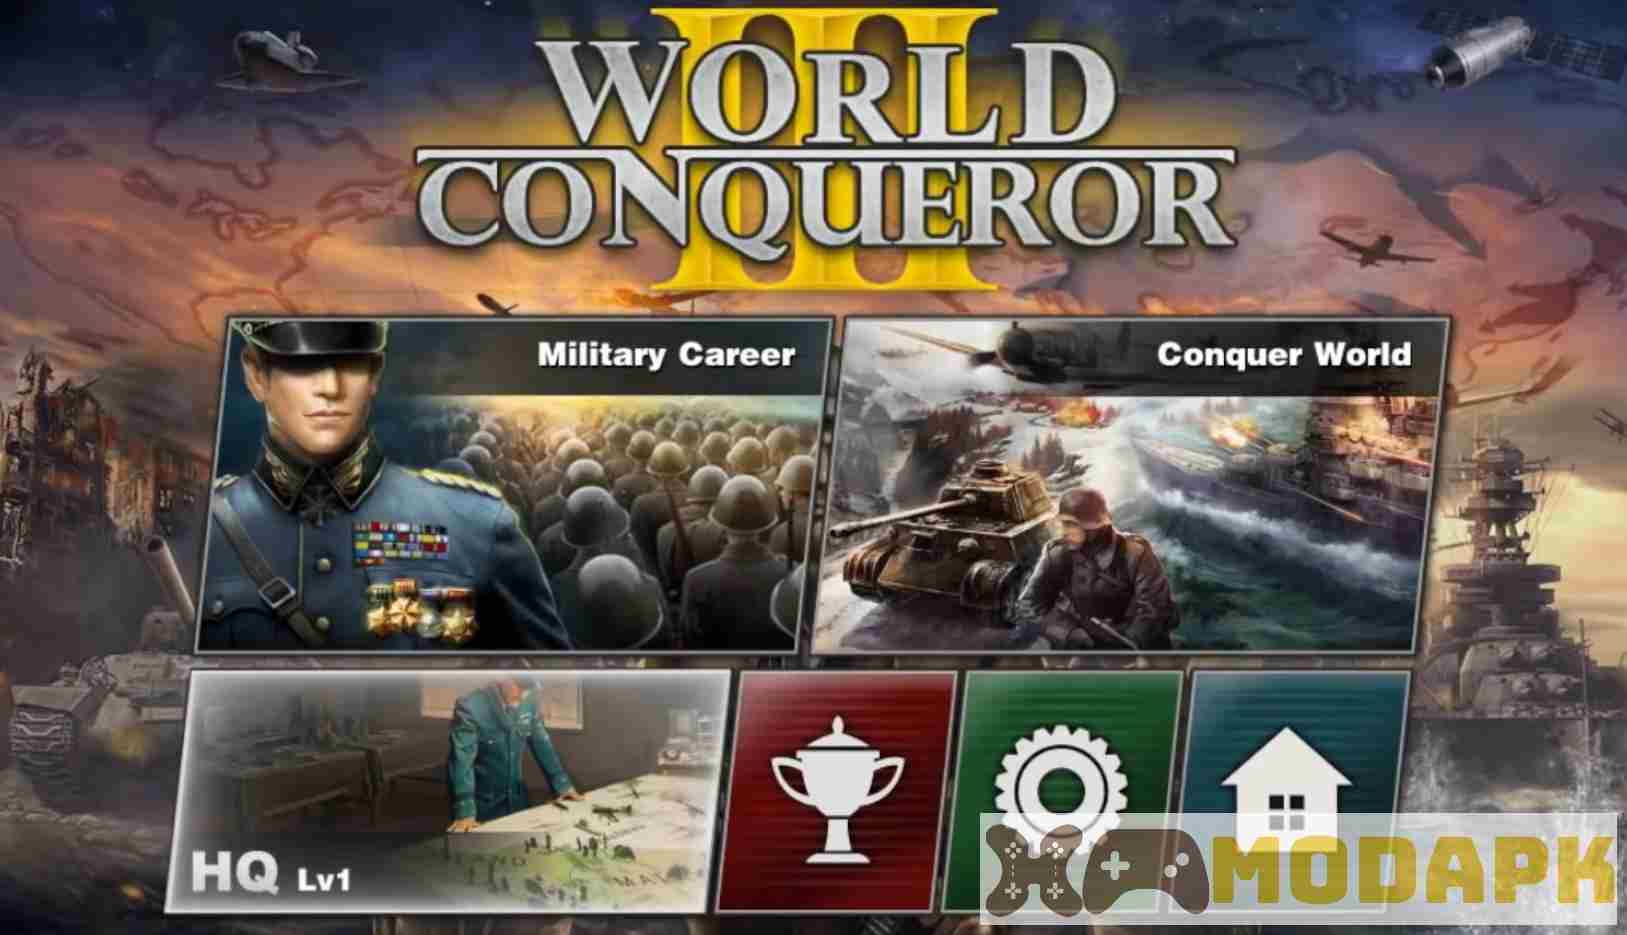 World Conqueror 3 MOD (Infinite Money, Infinite Silver, Full Oil, Max Level, Vietnam) APK 1.8.0